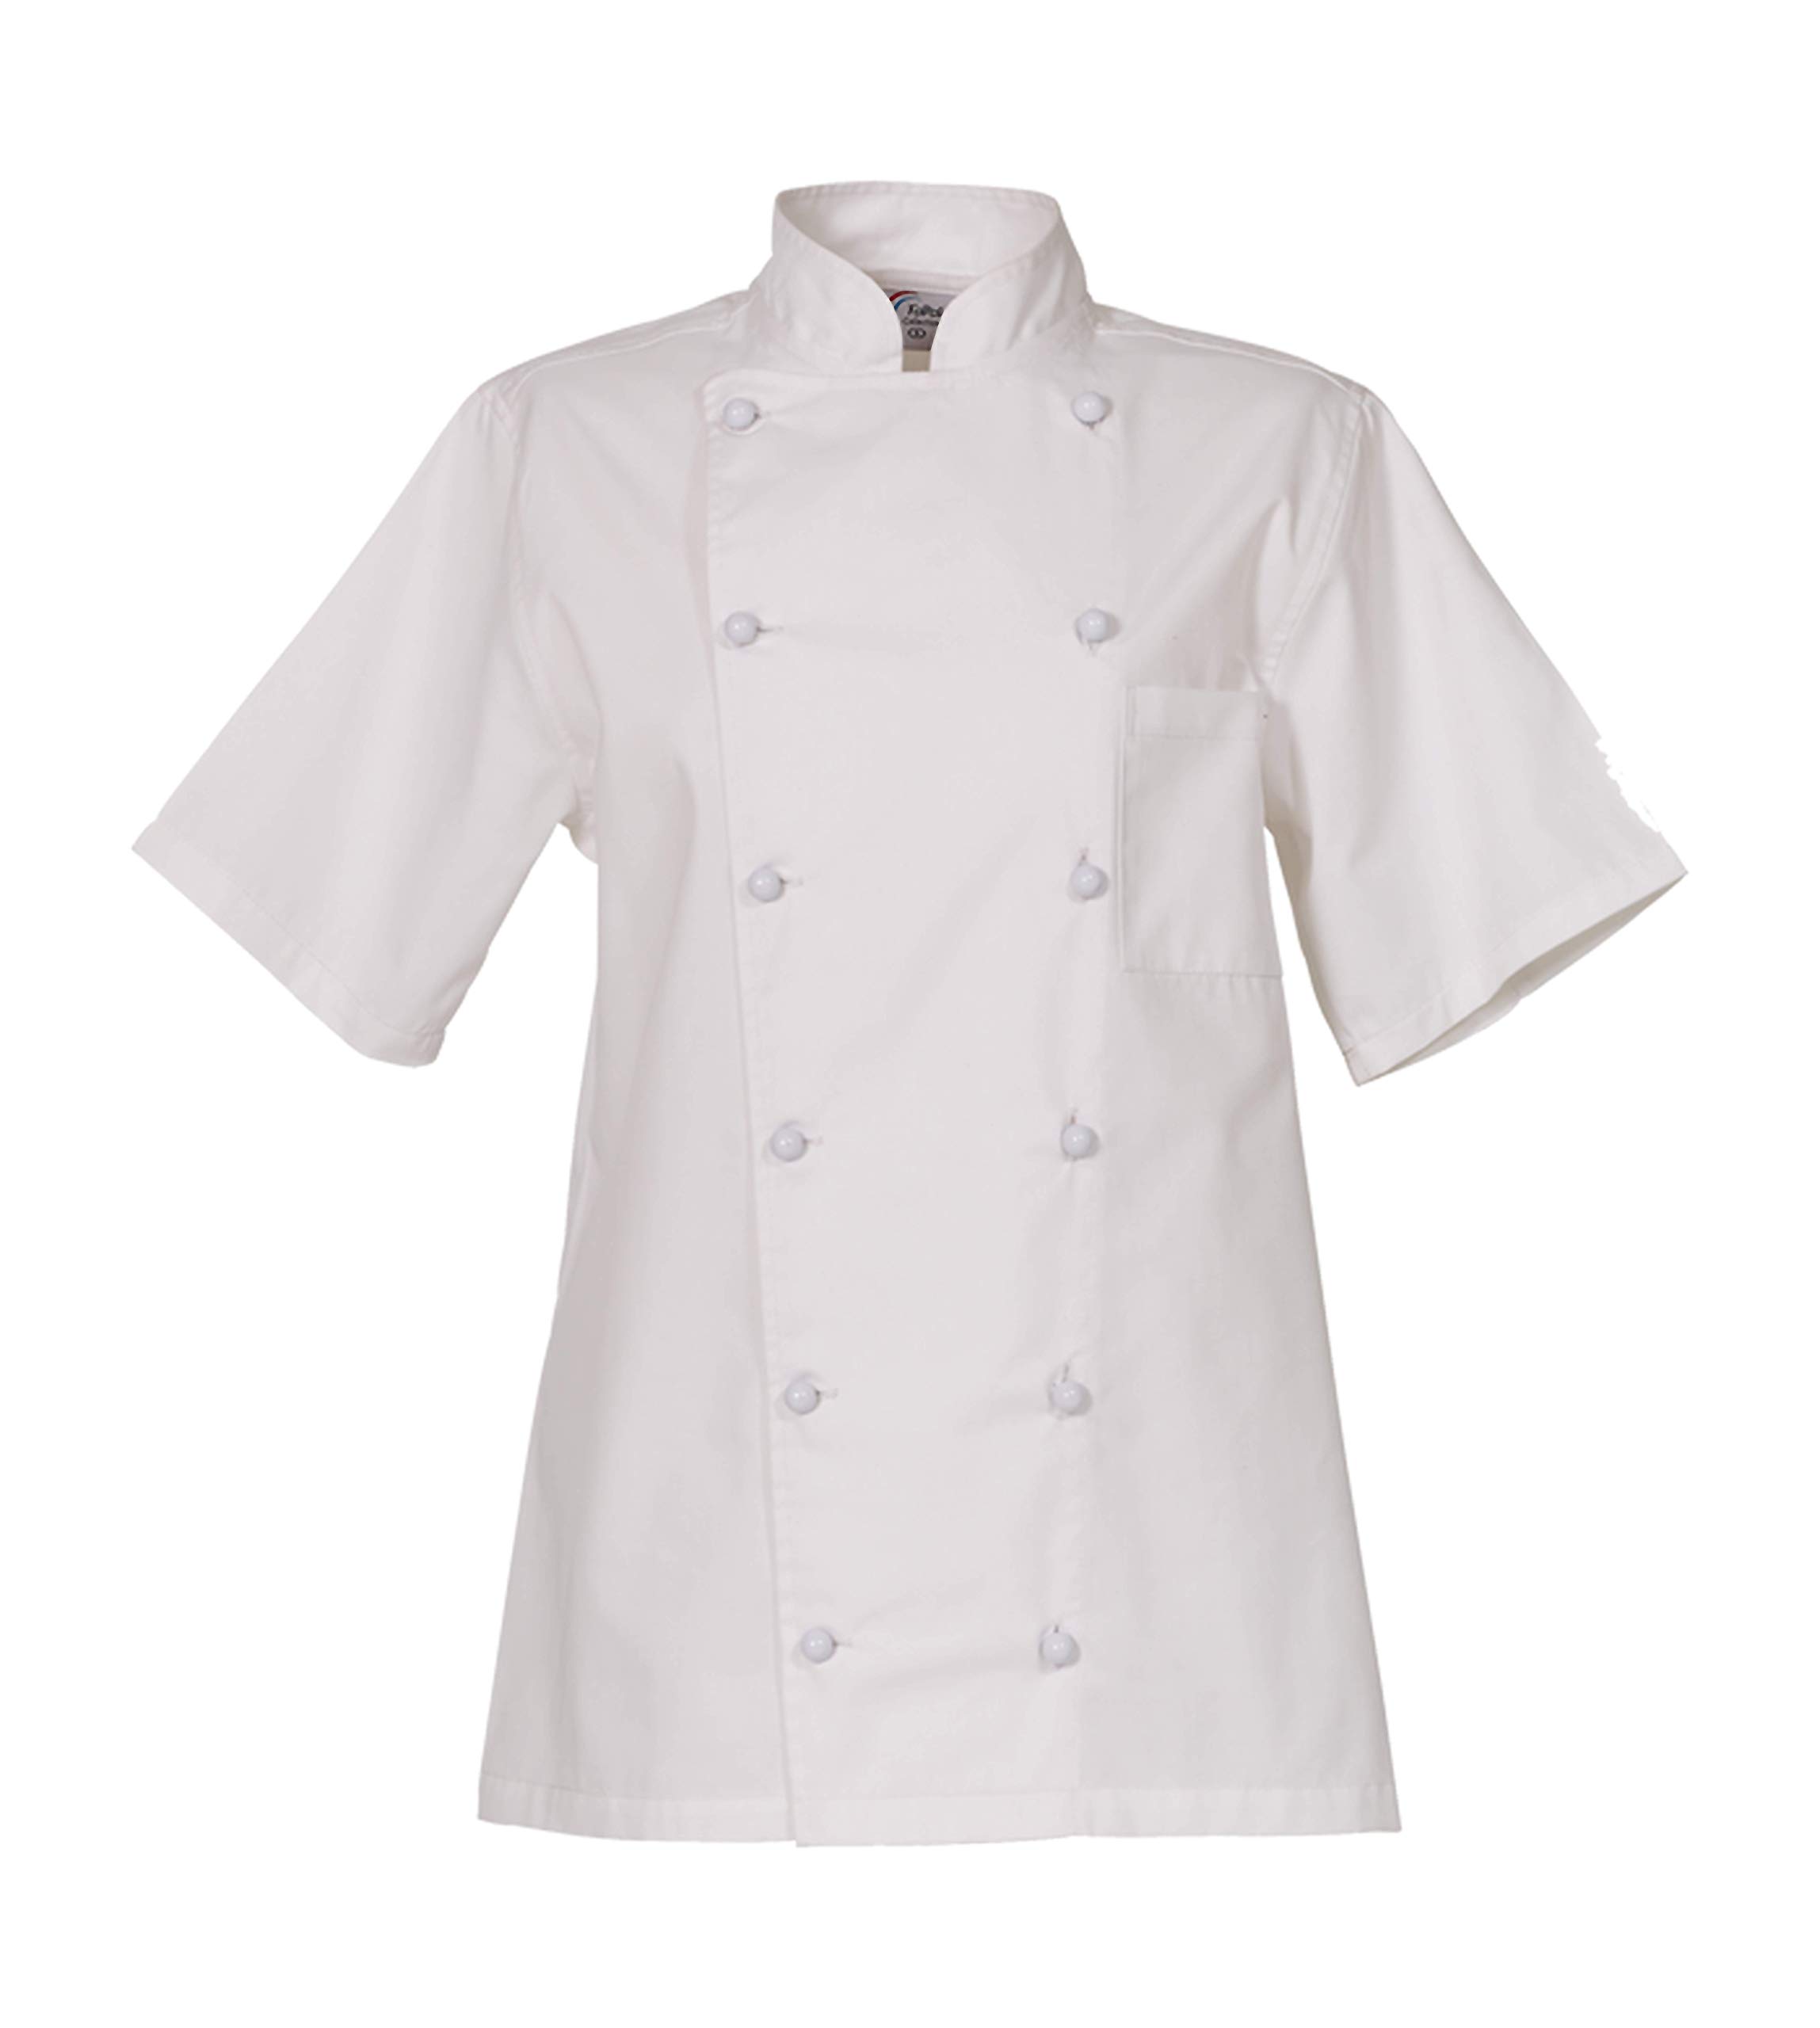 Gastro Uzal Damen-Kochjacke Kurzarm/Ladies Chef Jacket Short Sleeve,XS-3XL,1Stk., Gastronomie/Catering/Party/Pub/Bar/Kitchen (L)